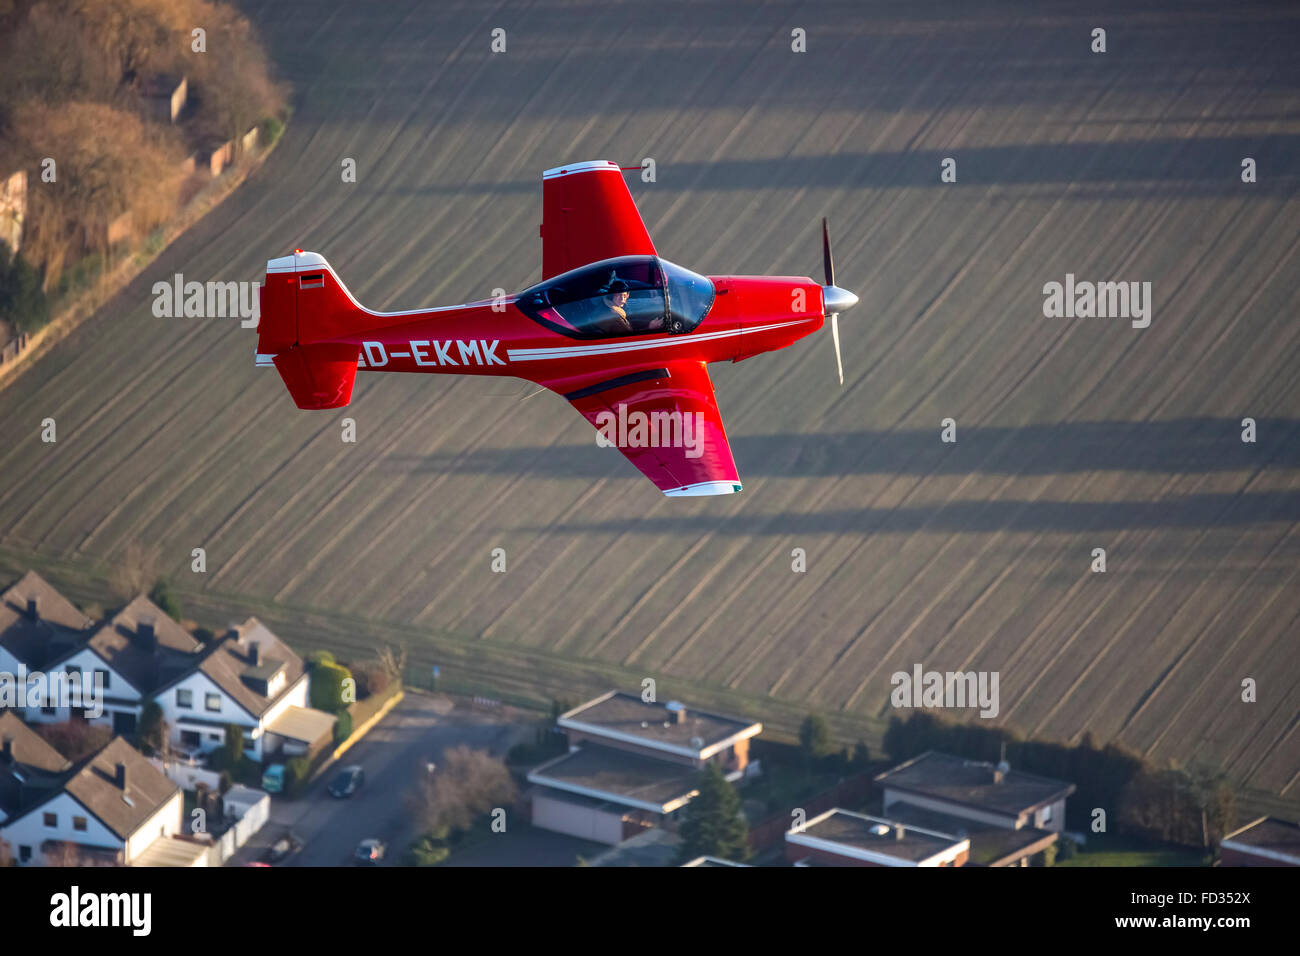 Aerial view, red plane Falco, timber construction, blue sky, D-EKMEK, general aviation, rice aircraft Echo class light aircraft Stock Photo